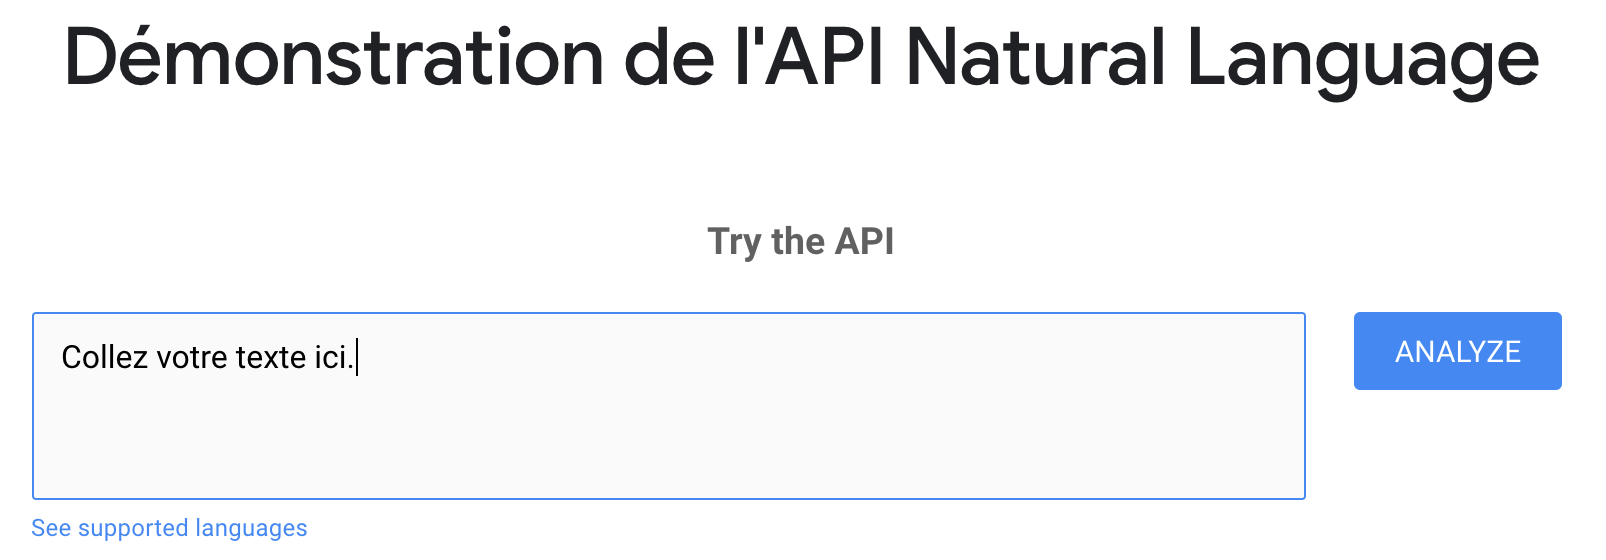 API Google langage naturel